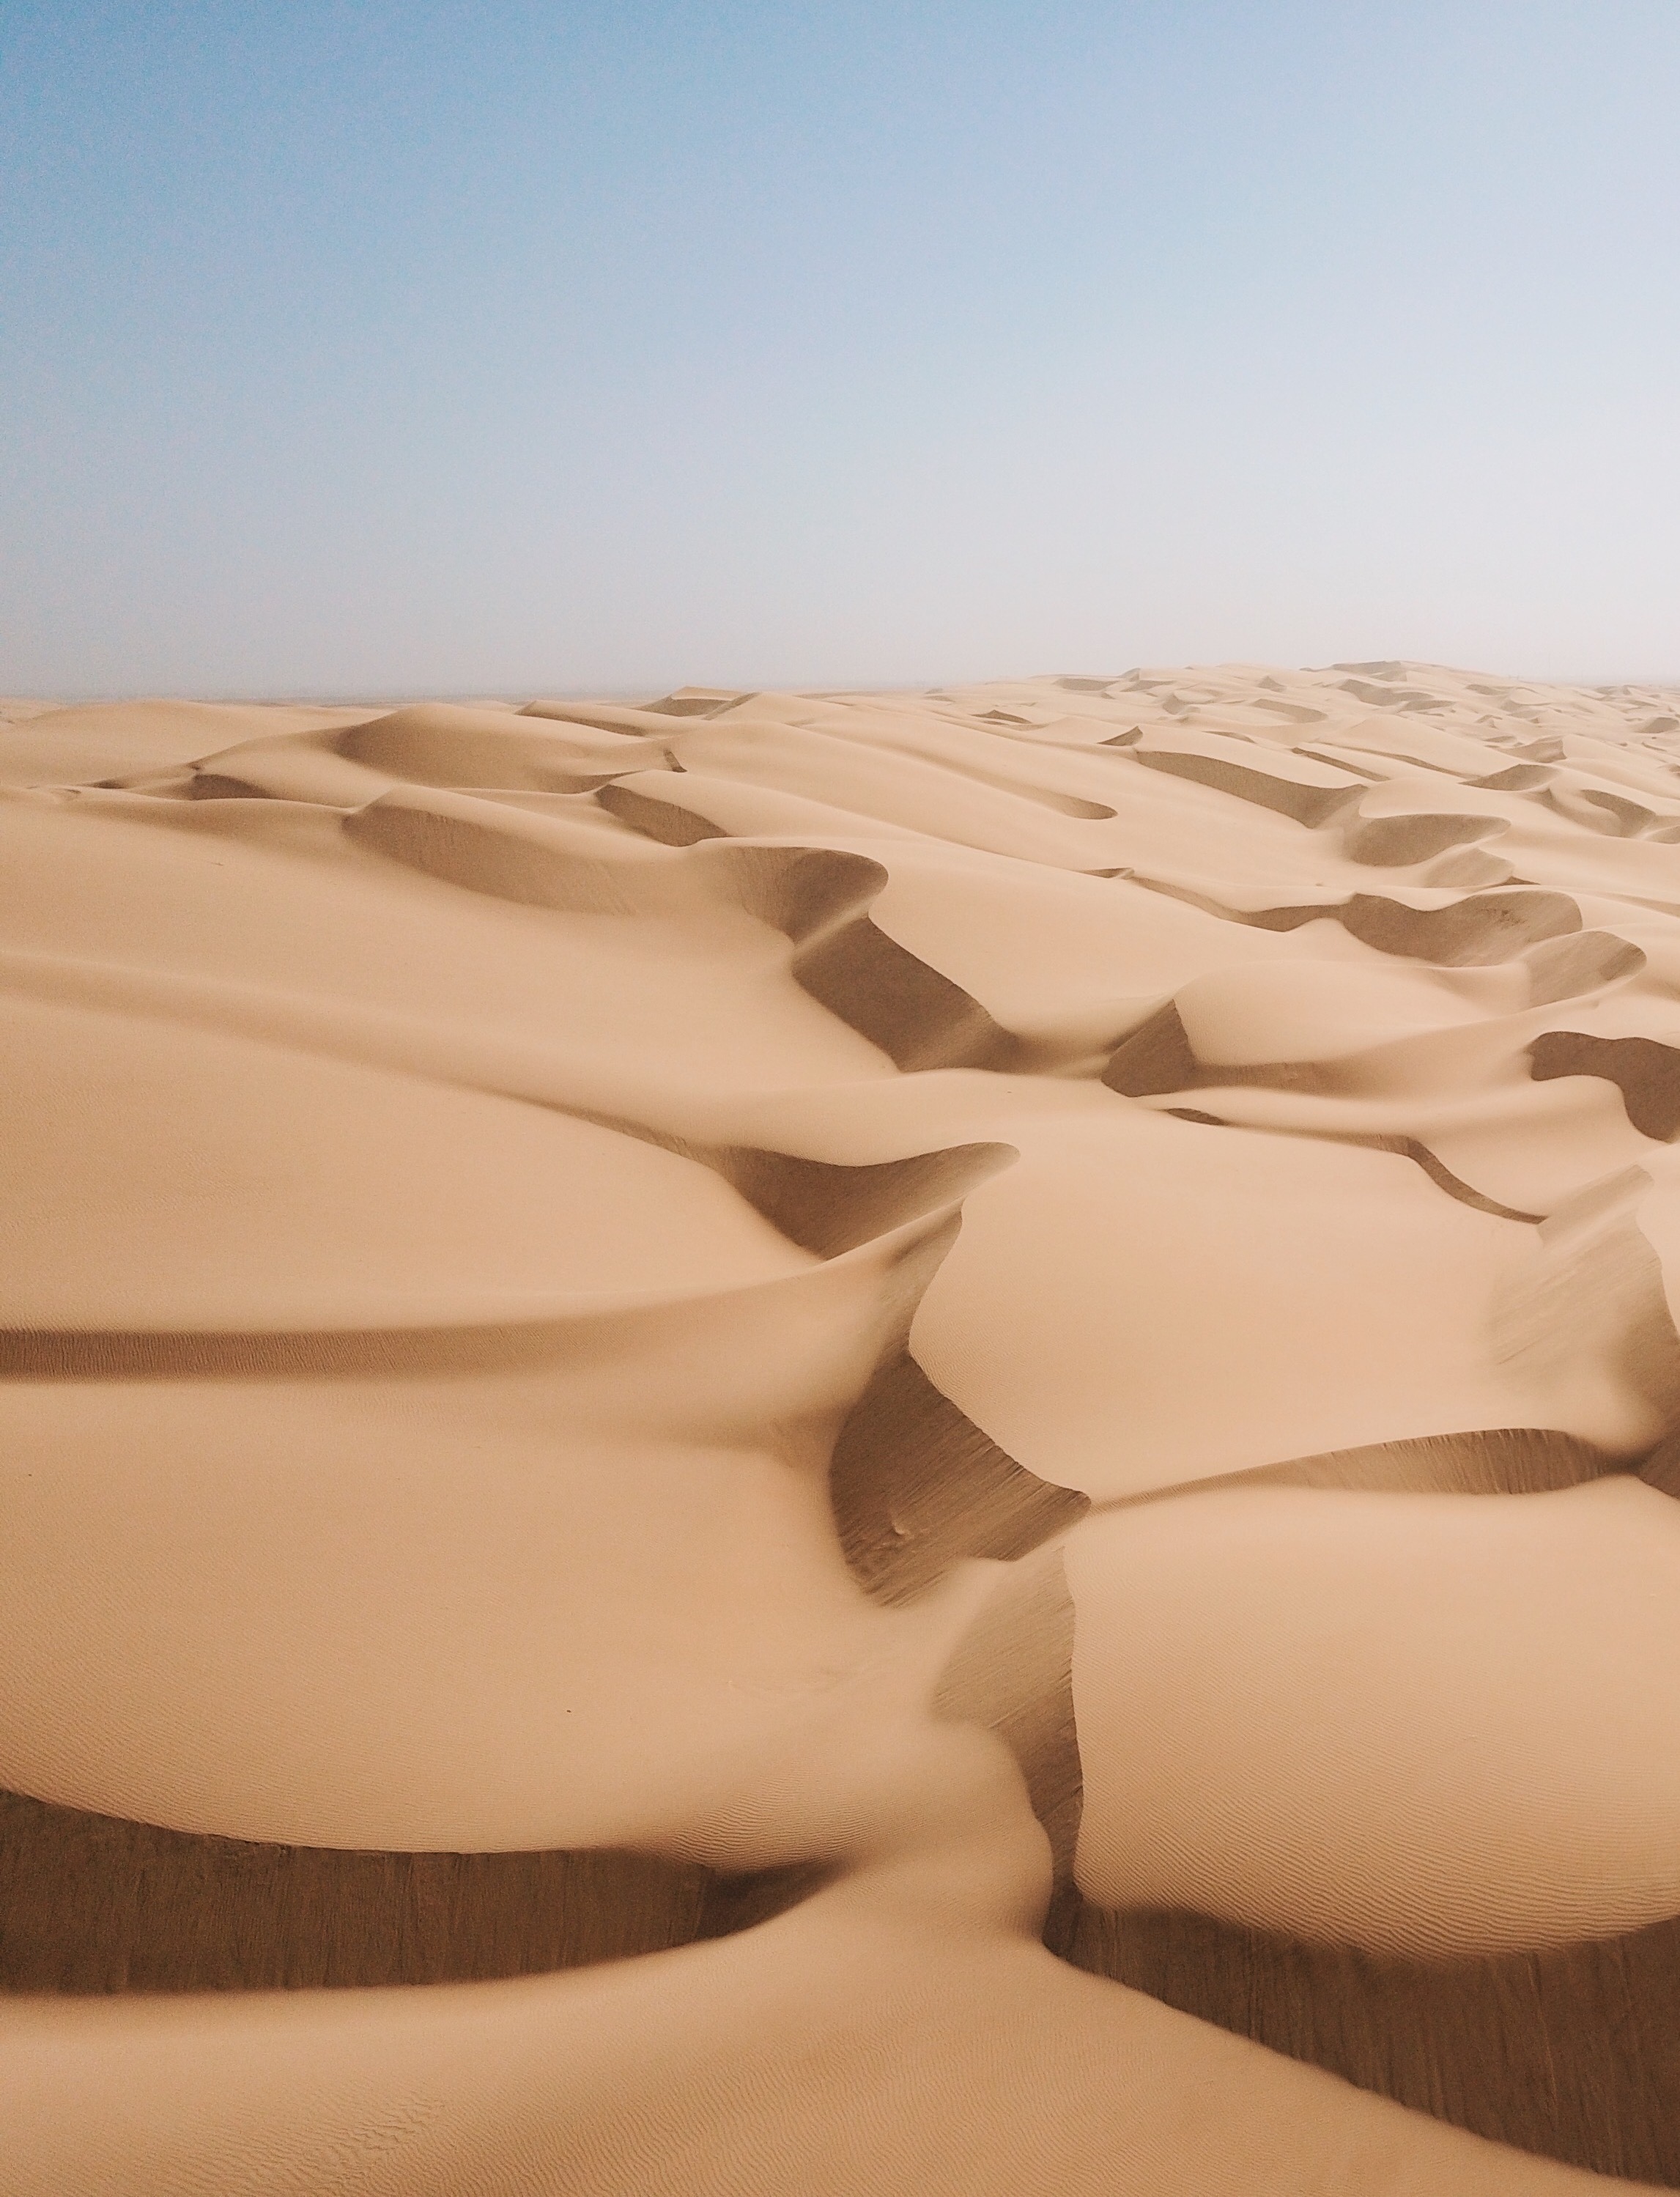 Photo free landscapes, sand, sand dune